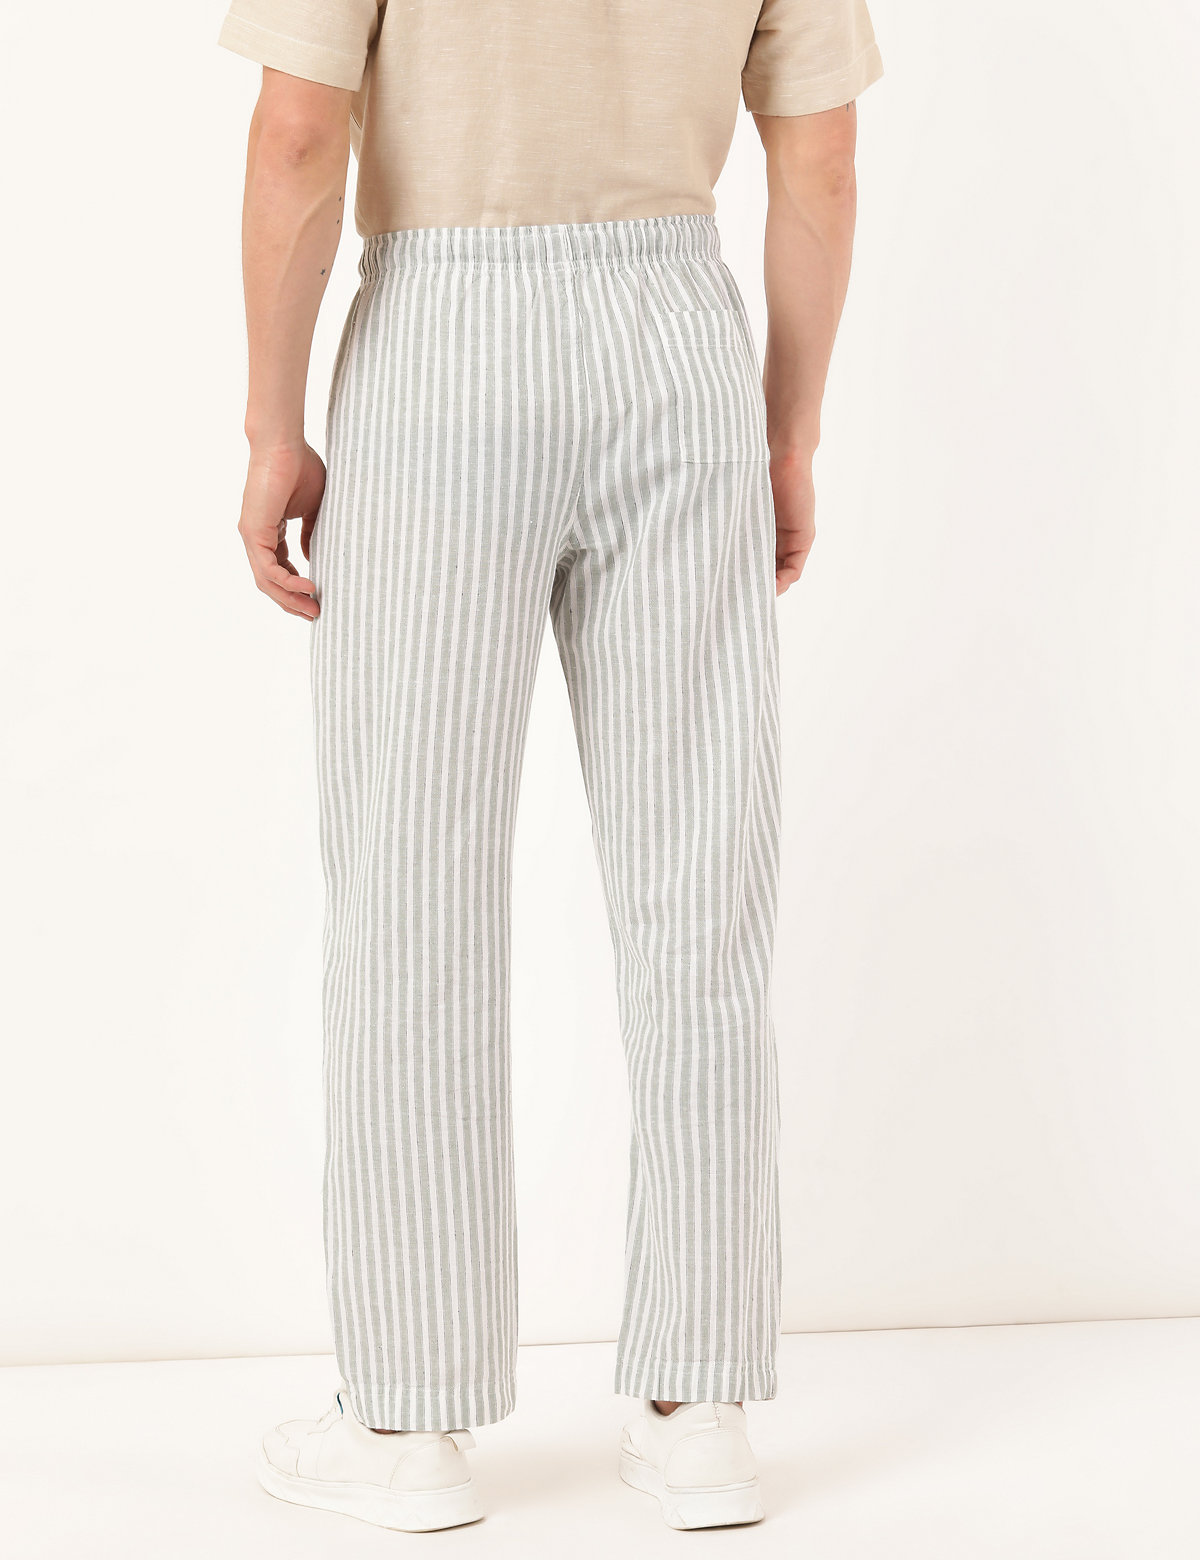 Cotton Linen Mix Striped Regular Fit Pyjama